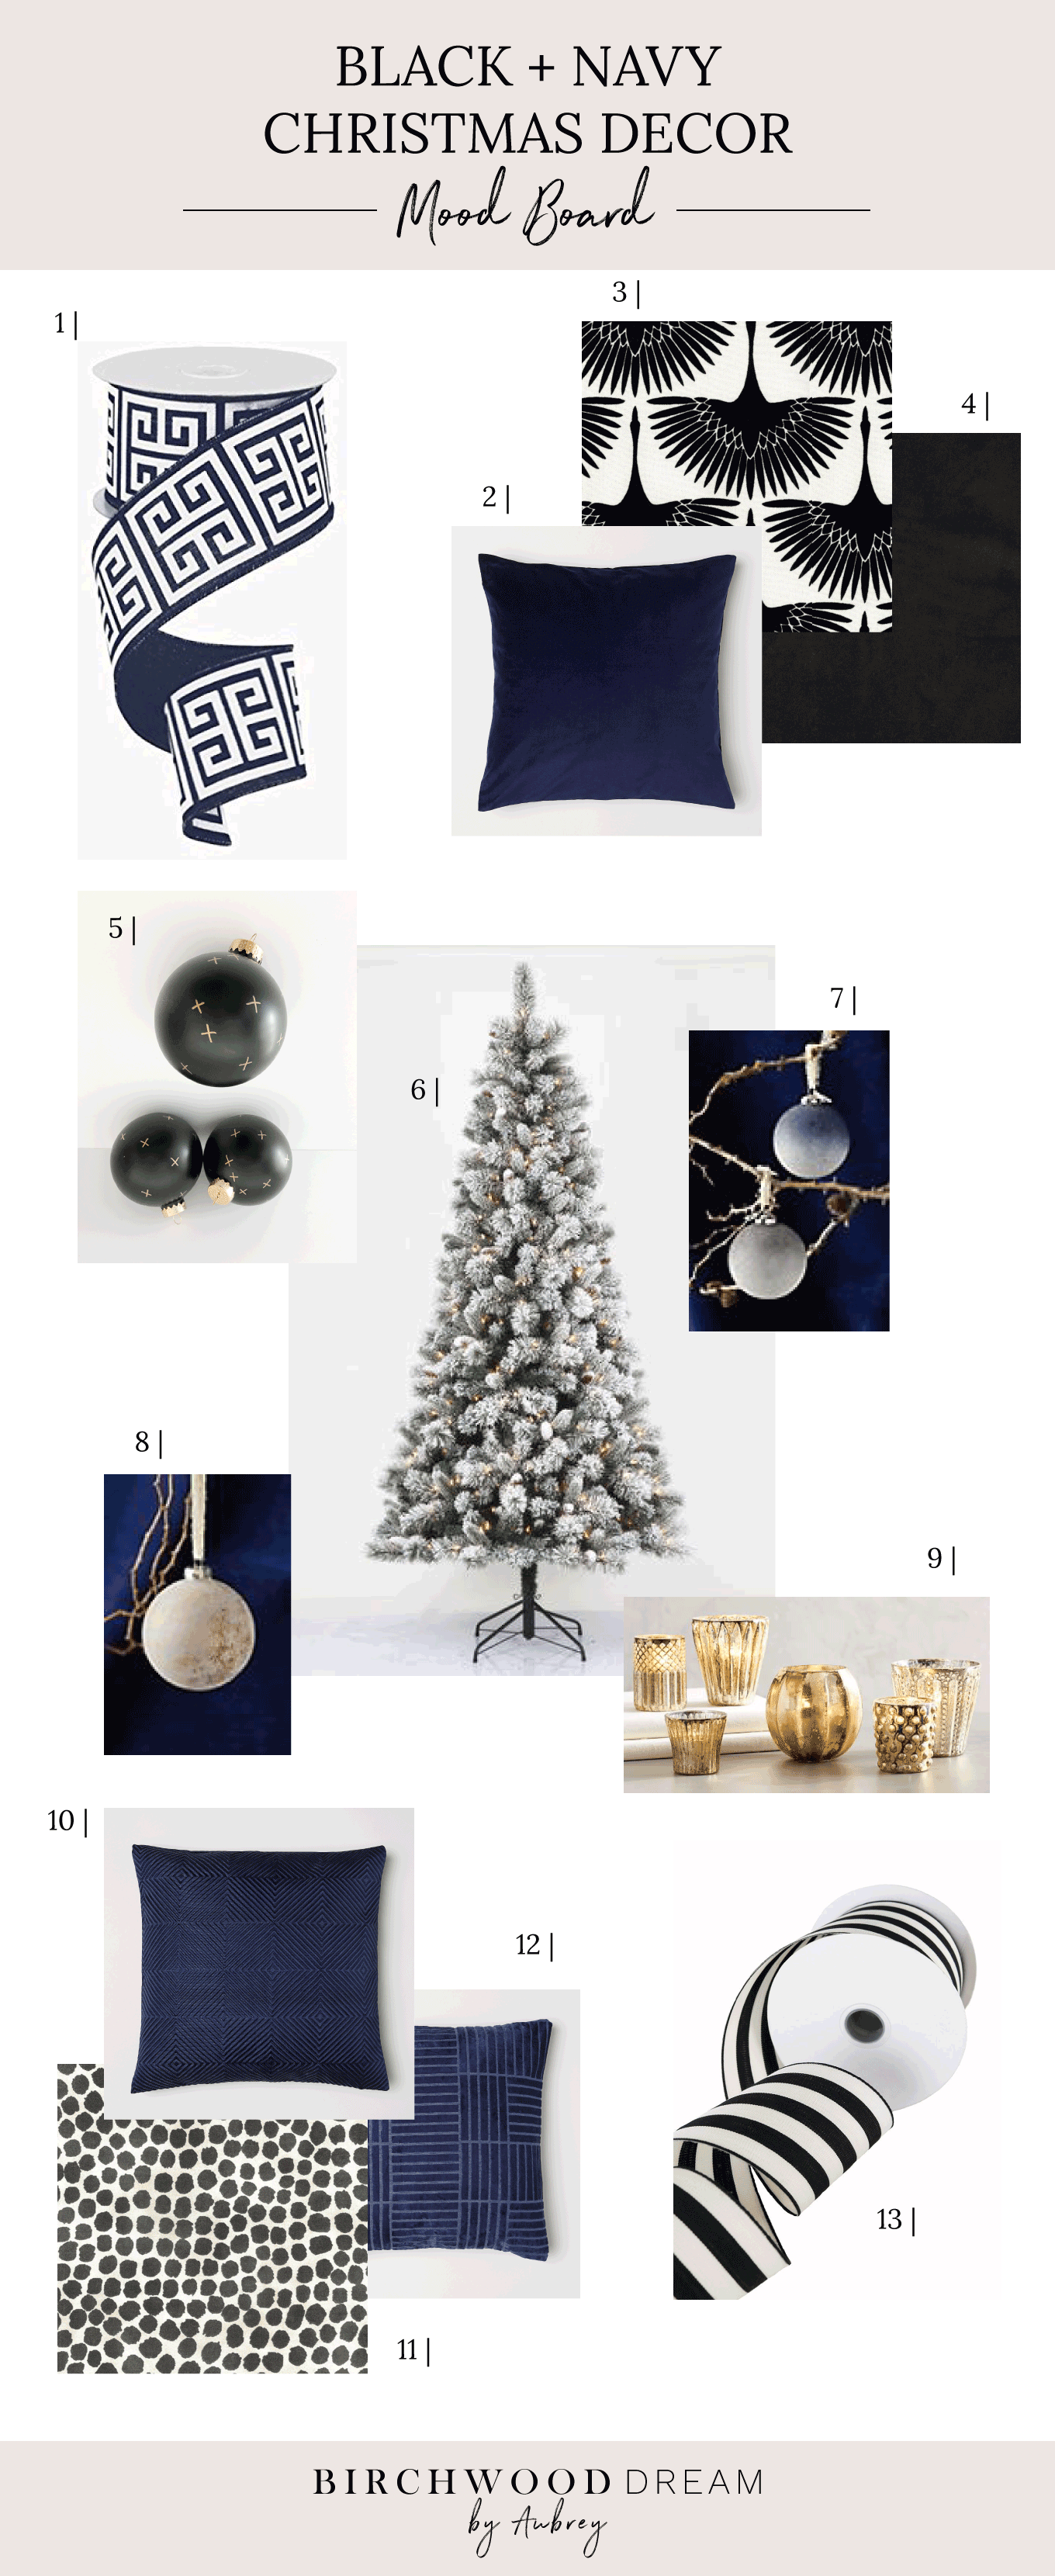 Black + Navy Christmas Scheme | Inspiration